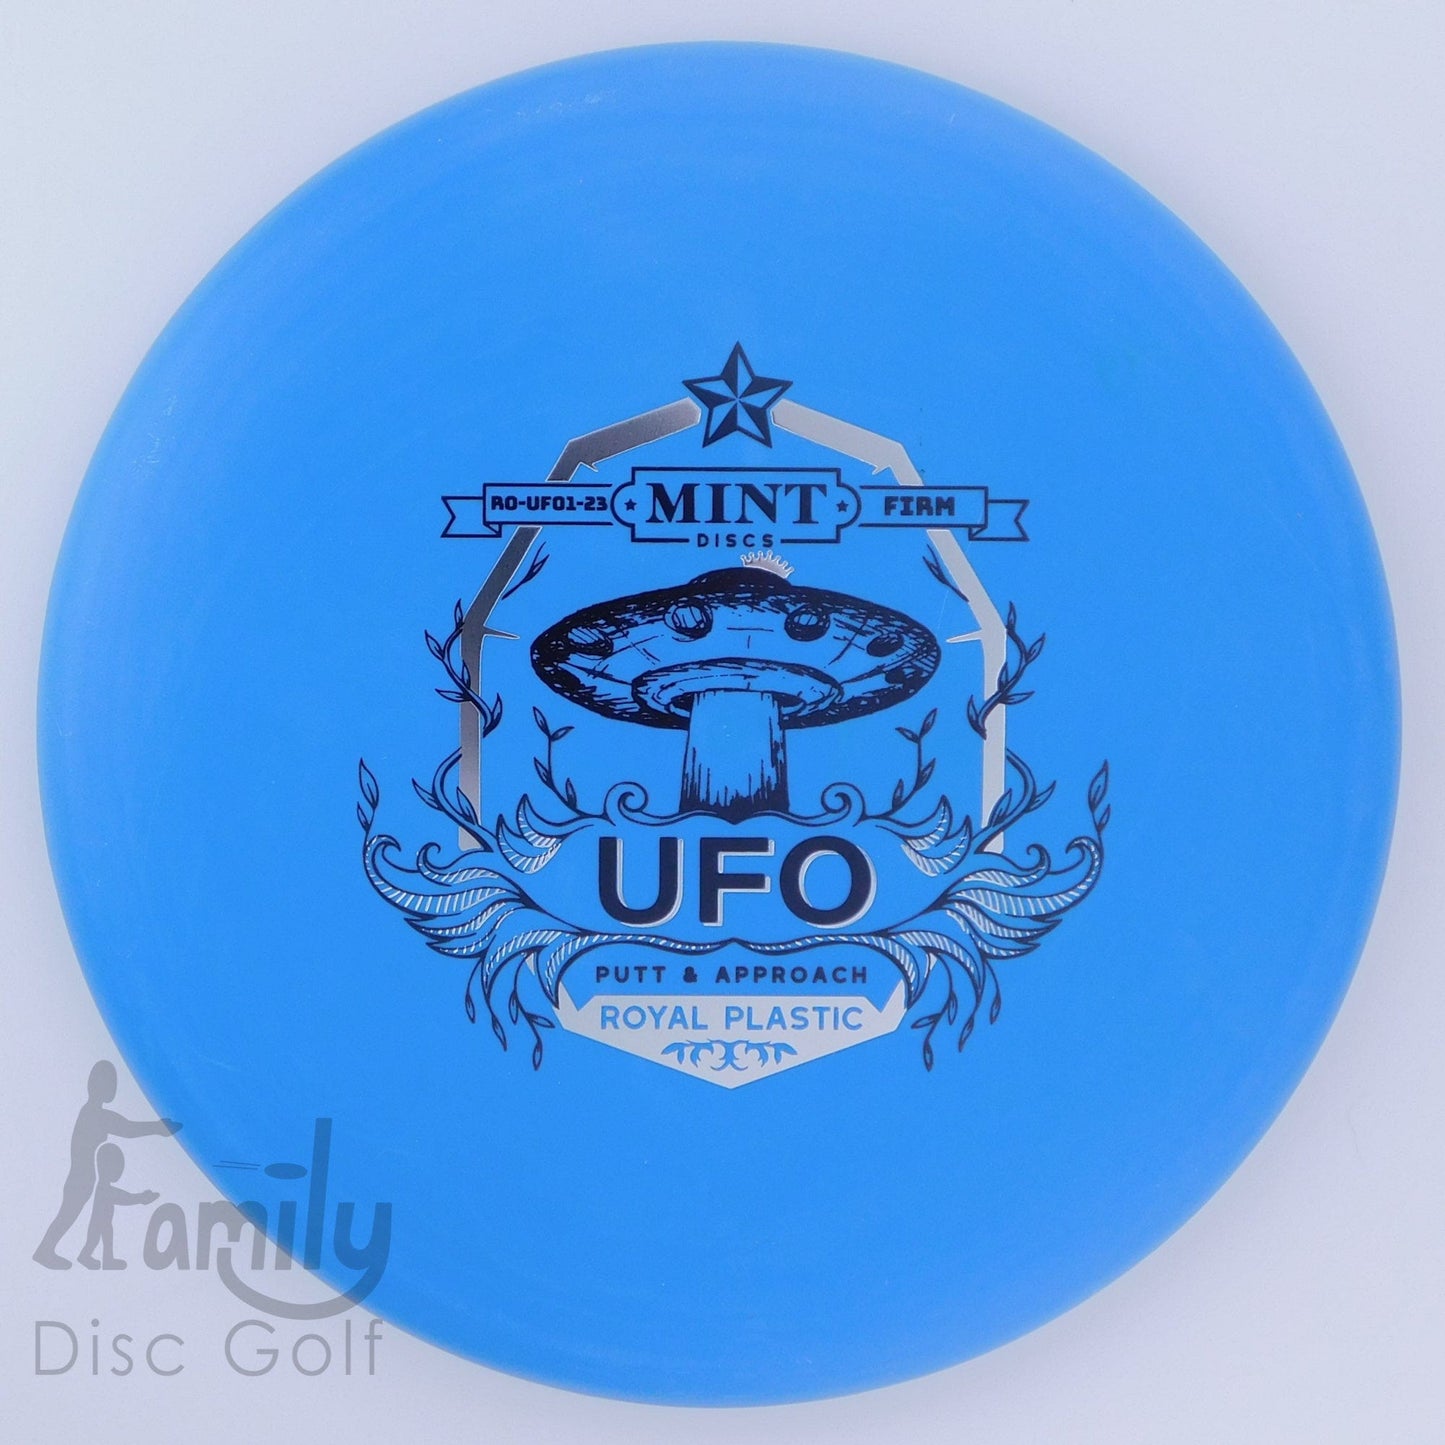 Mint Discs UFO - Royal (Firm) 2│3│0│1 173.4g - Blue - Mint Discs UFO - Royal Firm - 101563